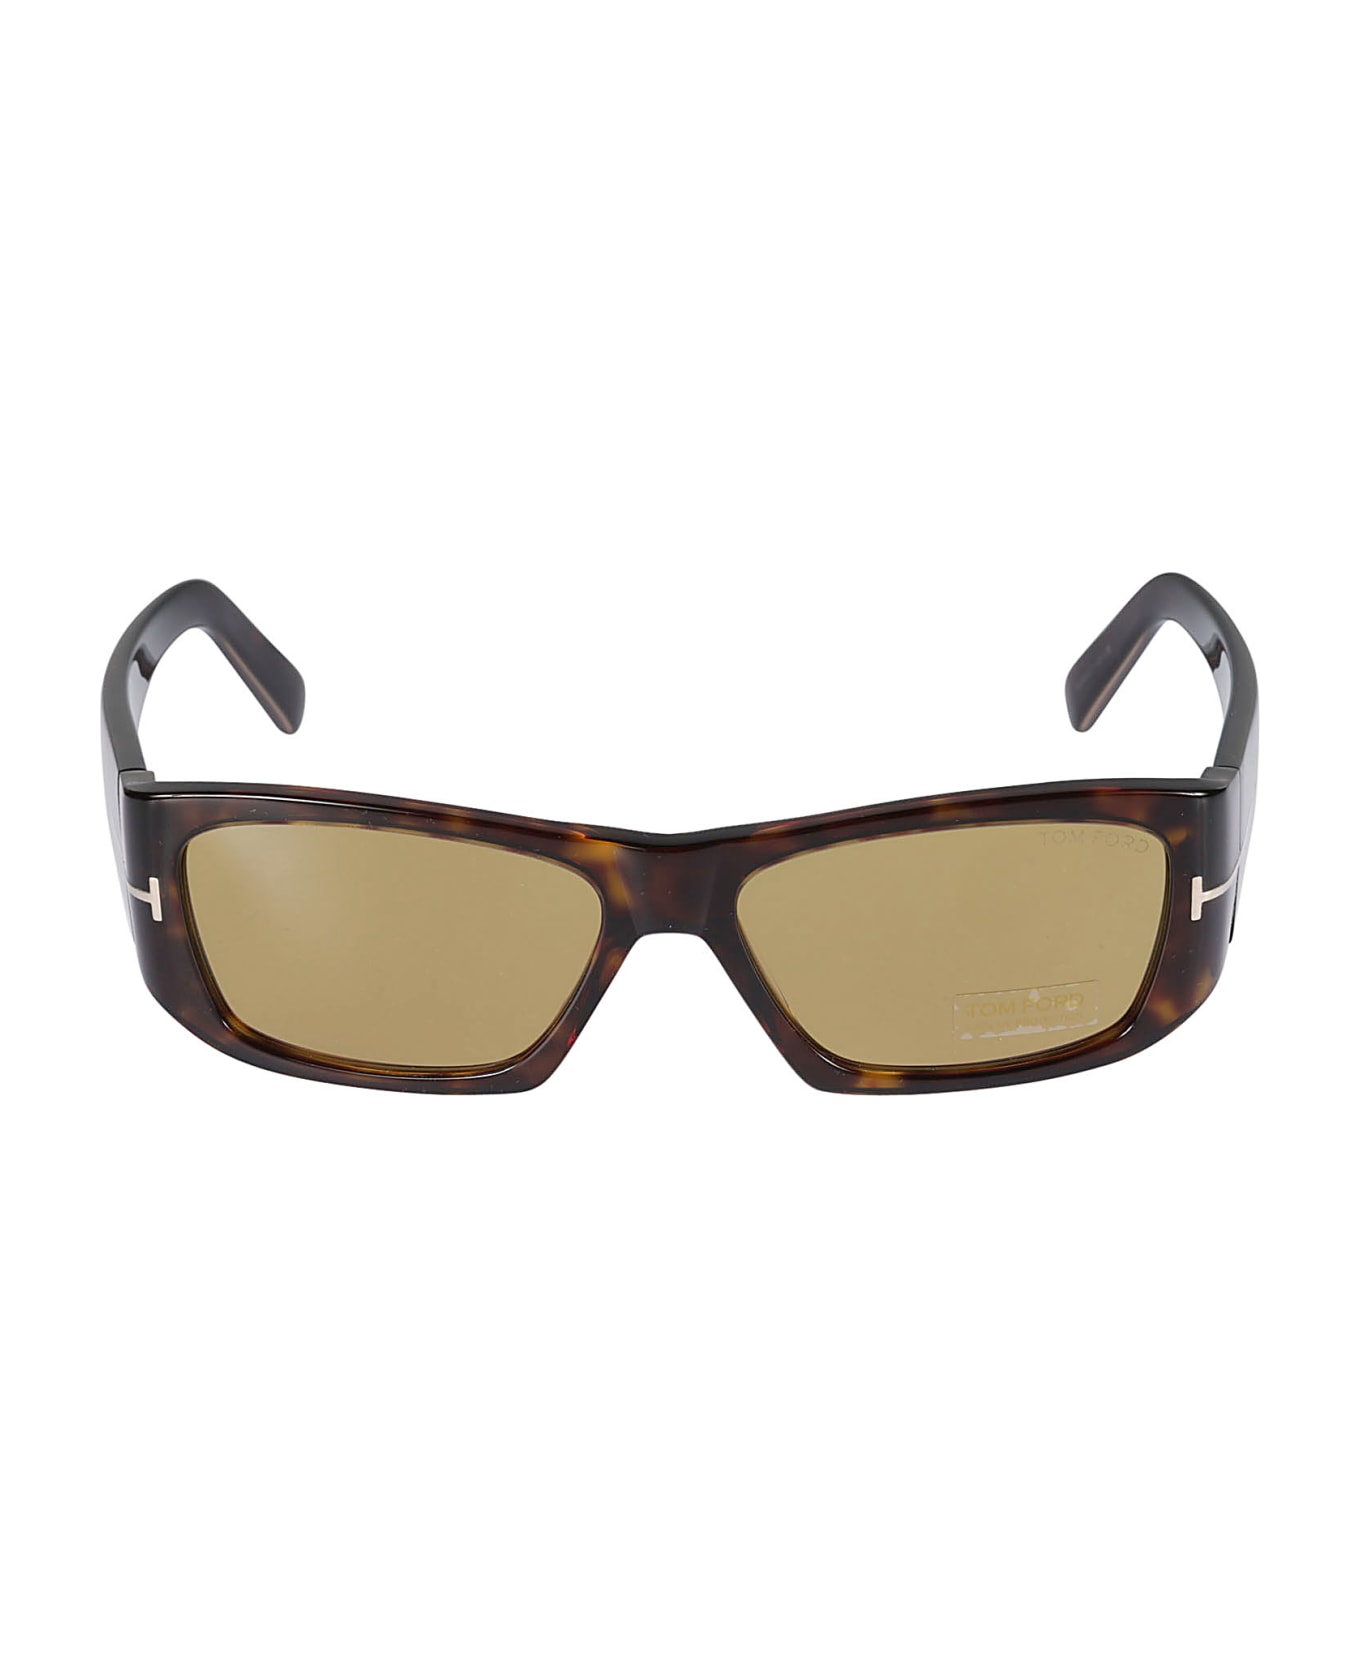 Tom Ford Eyewear Andres-02 Sunglasses - Nero